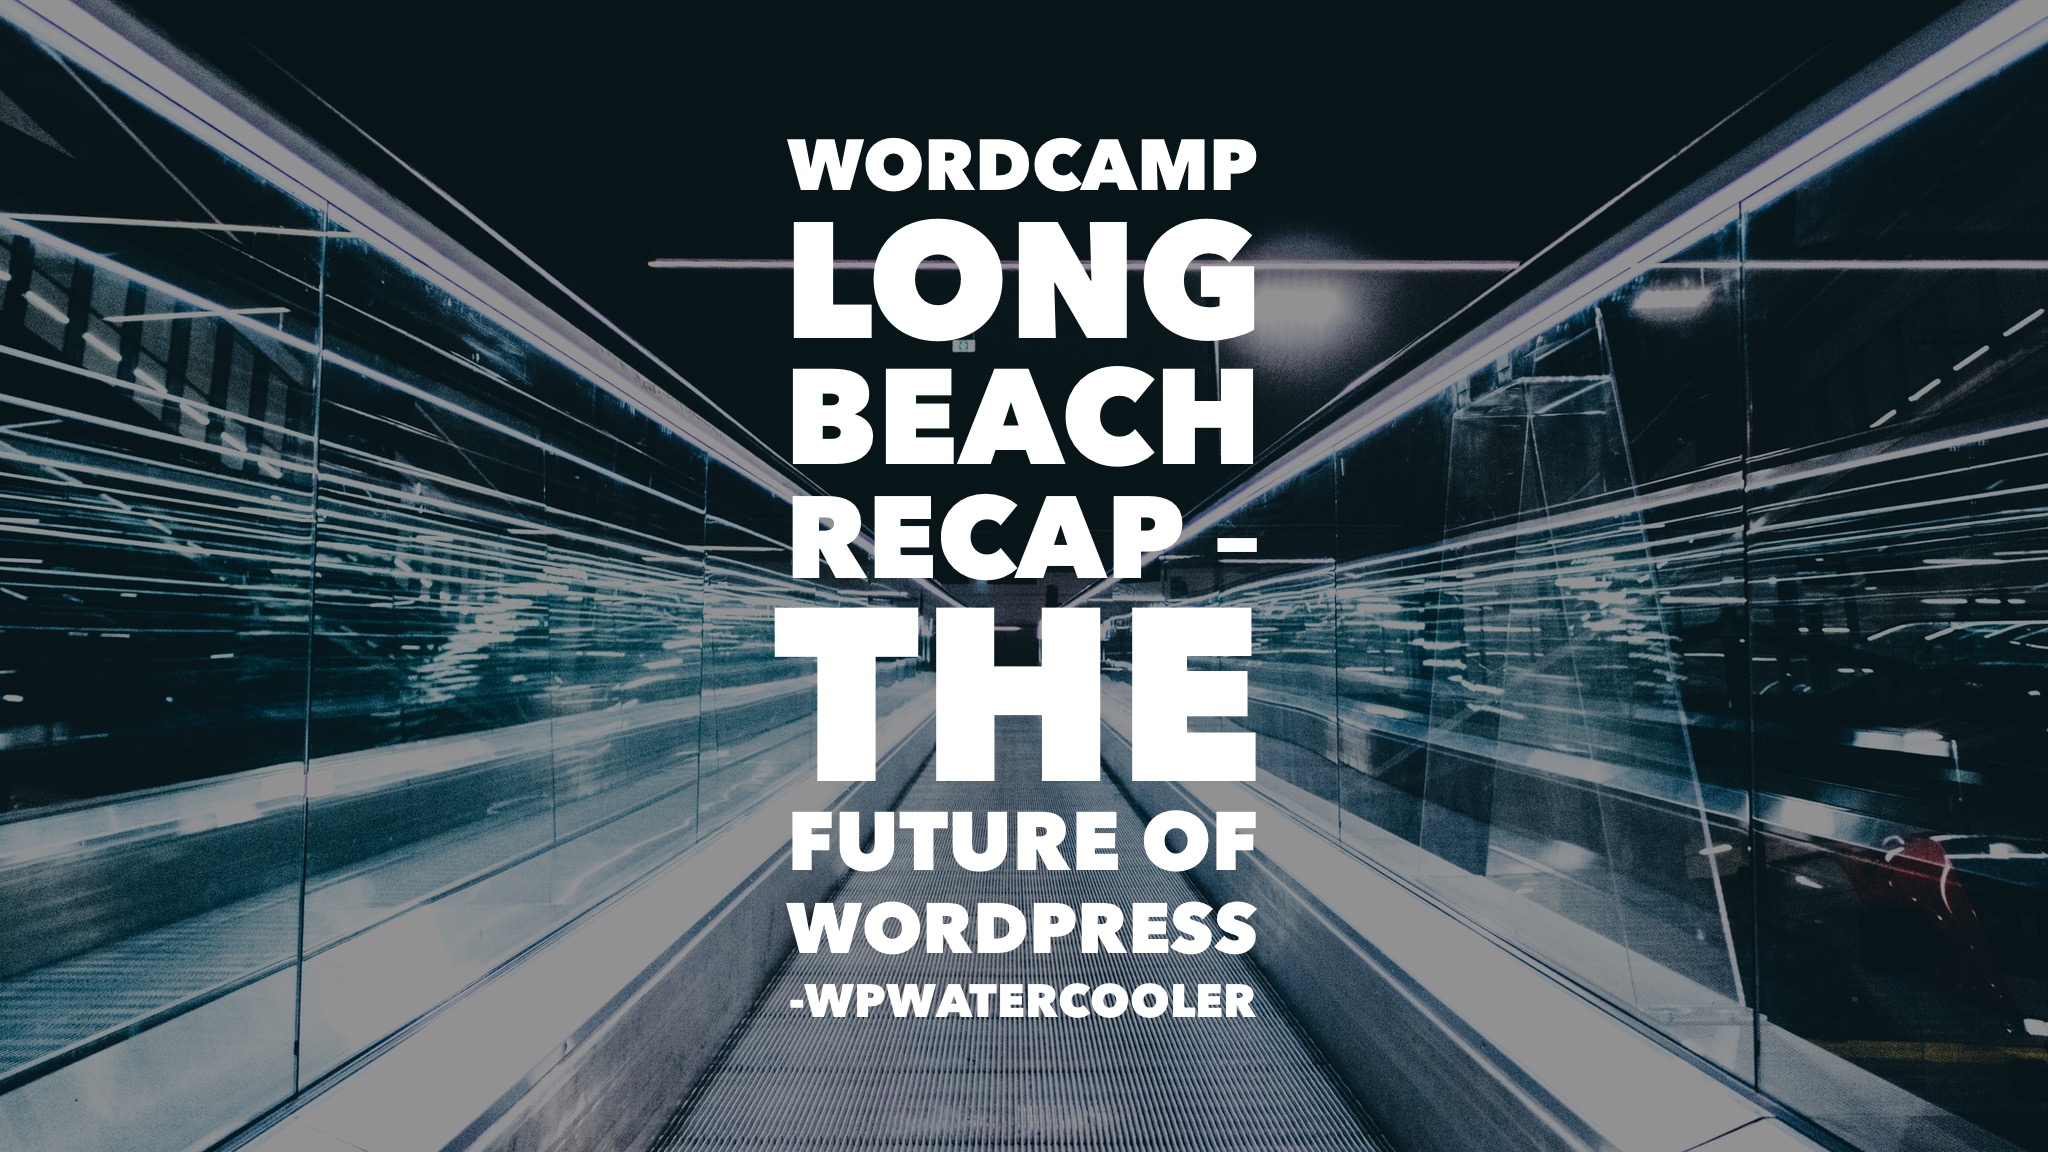 EP340 - WordCamp Long Beach Recap - The Future of WordPress